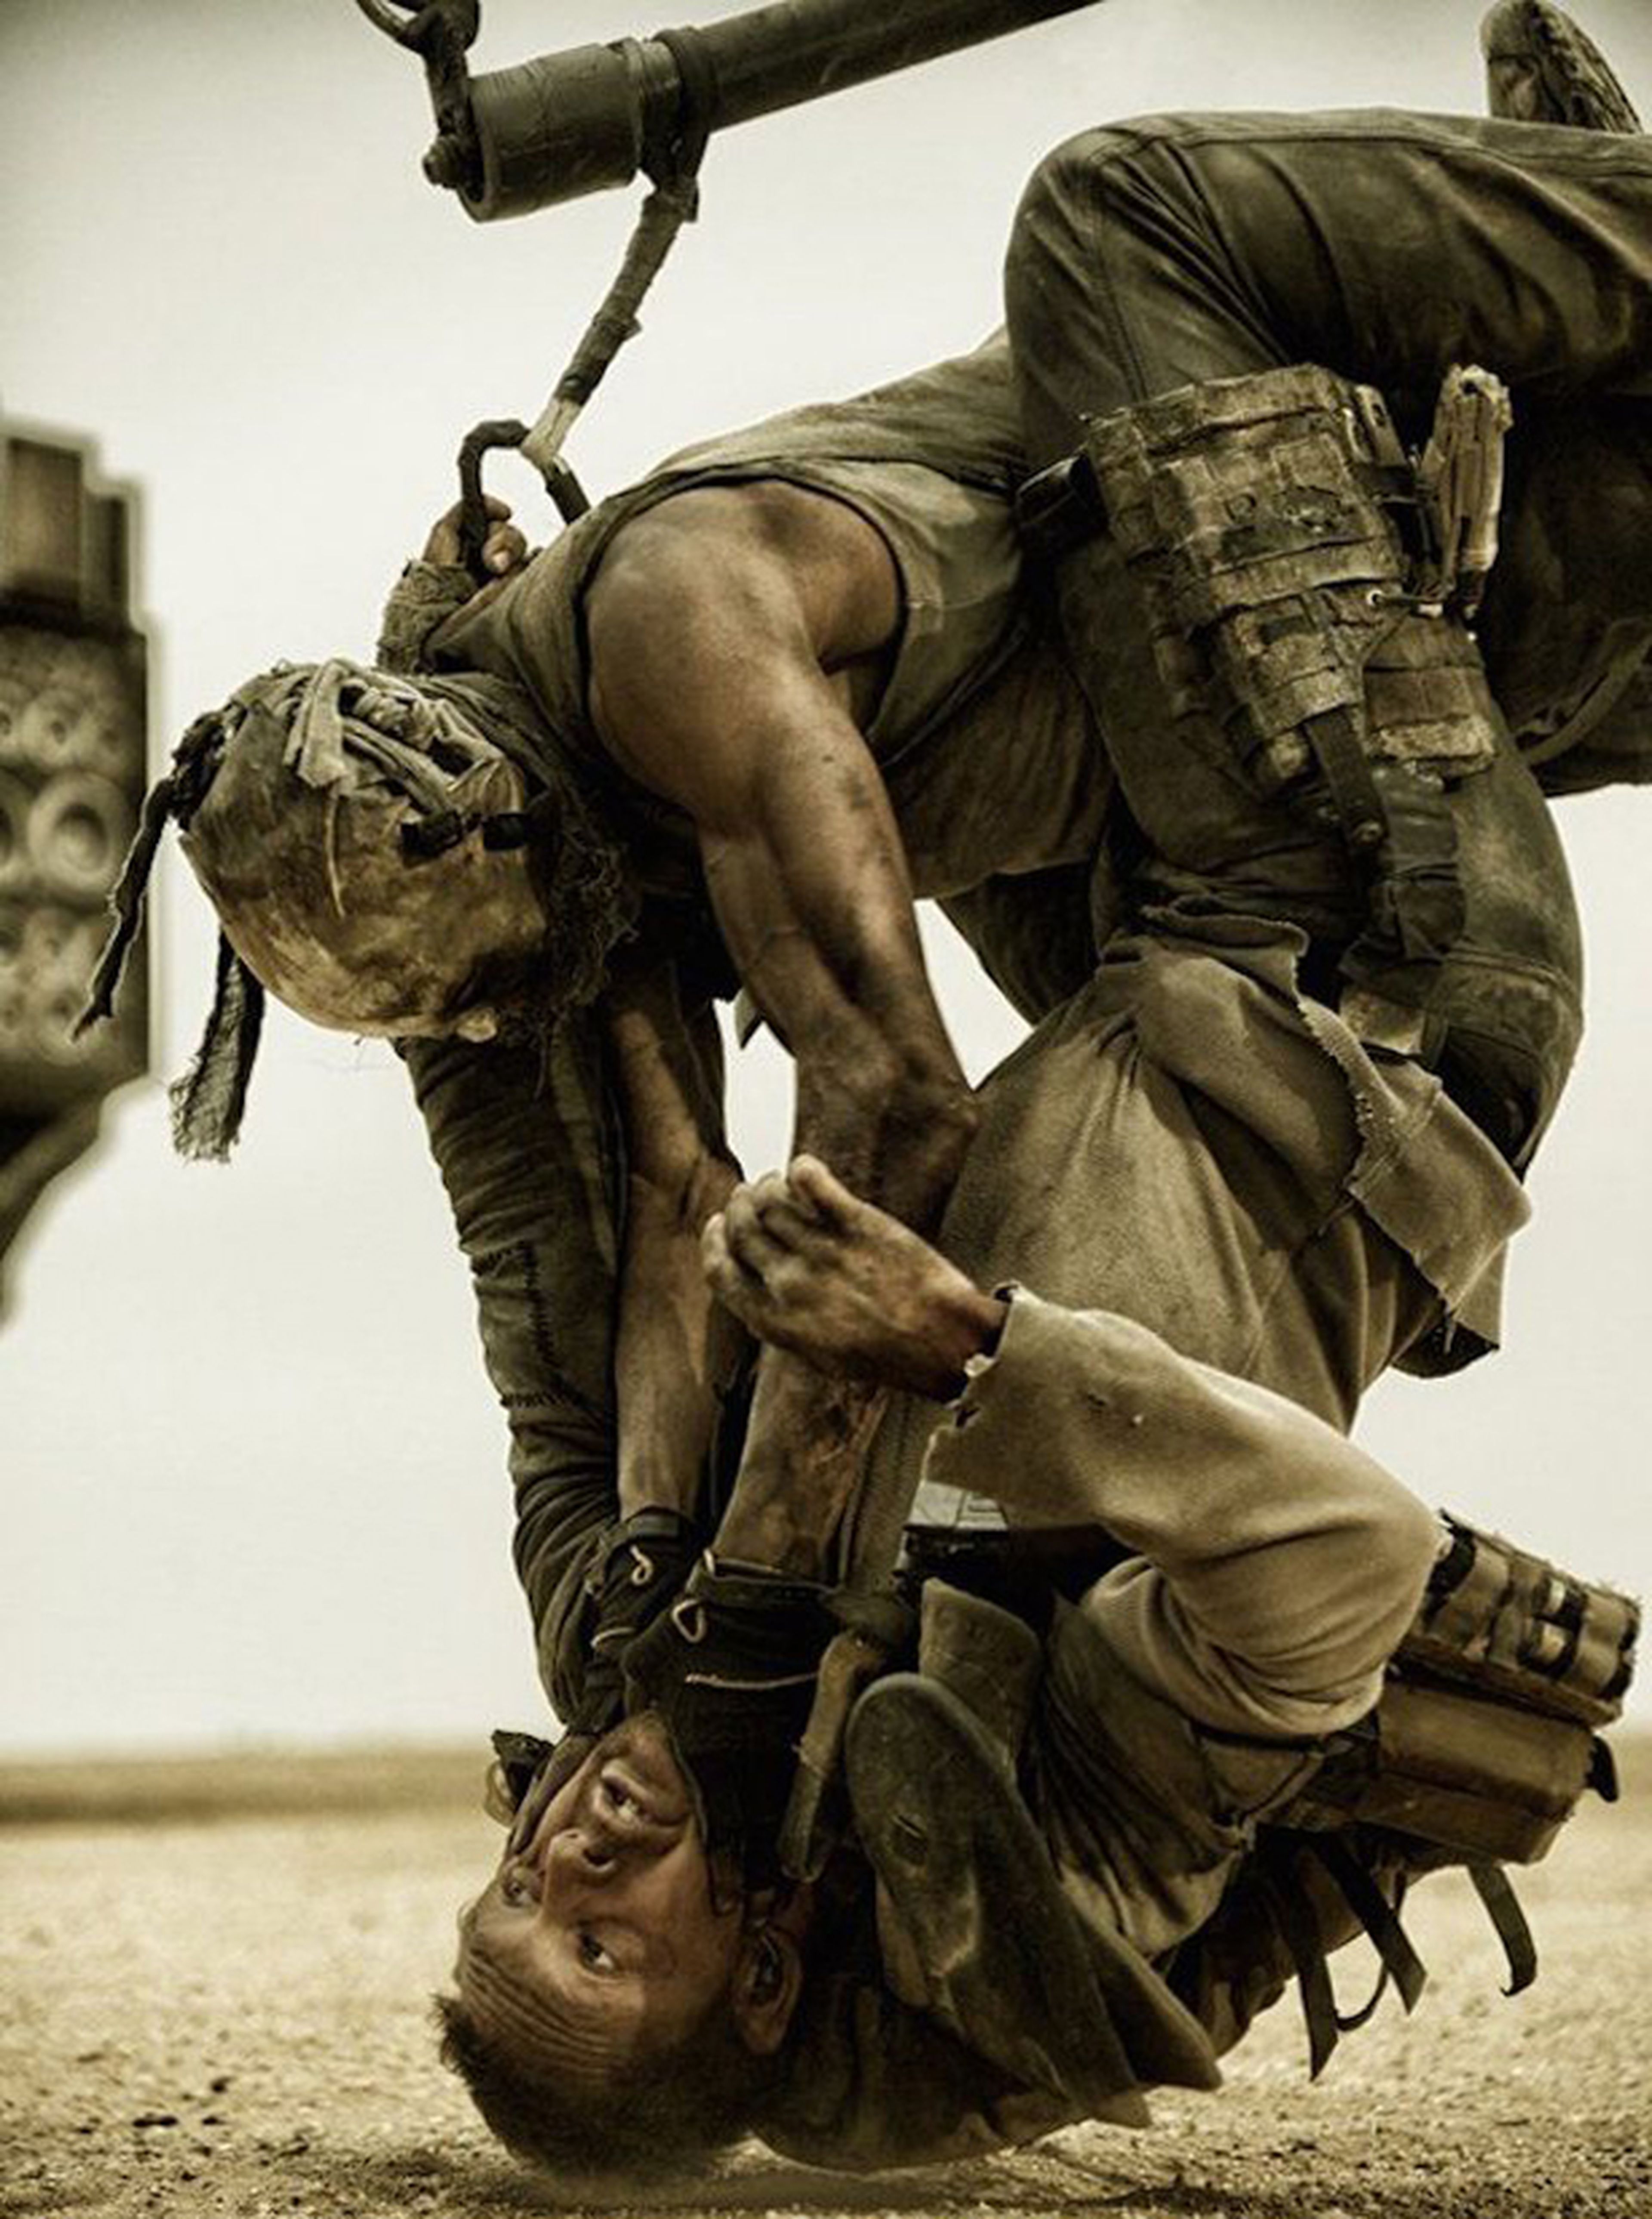 Mad Max: furia en la carretera - Crítica de la ganadora de 6 Oscars en 2016